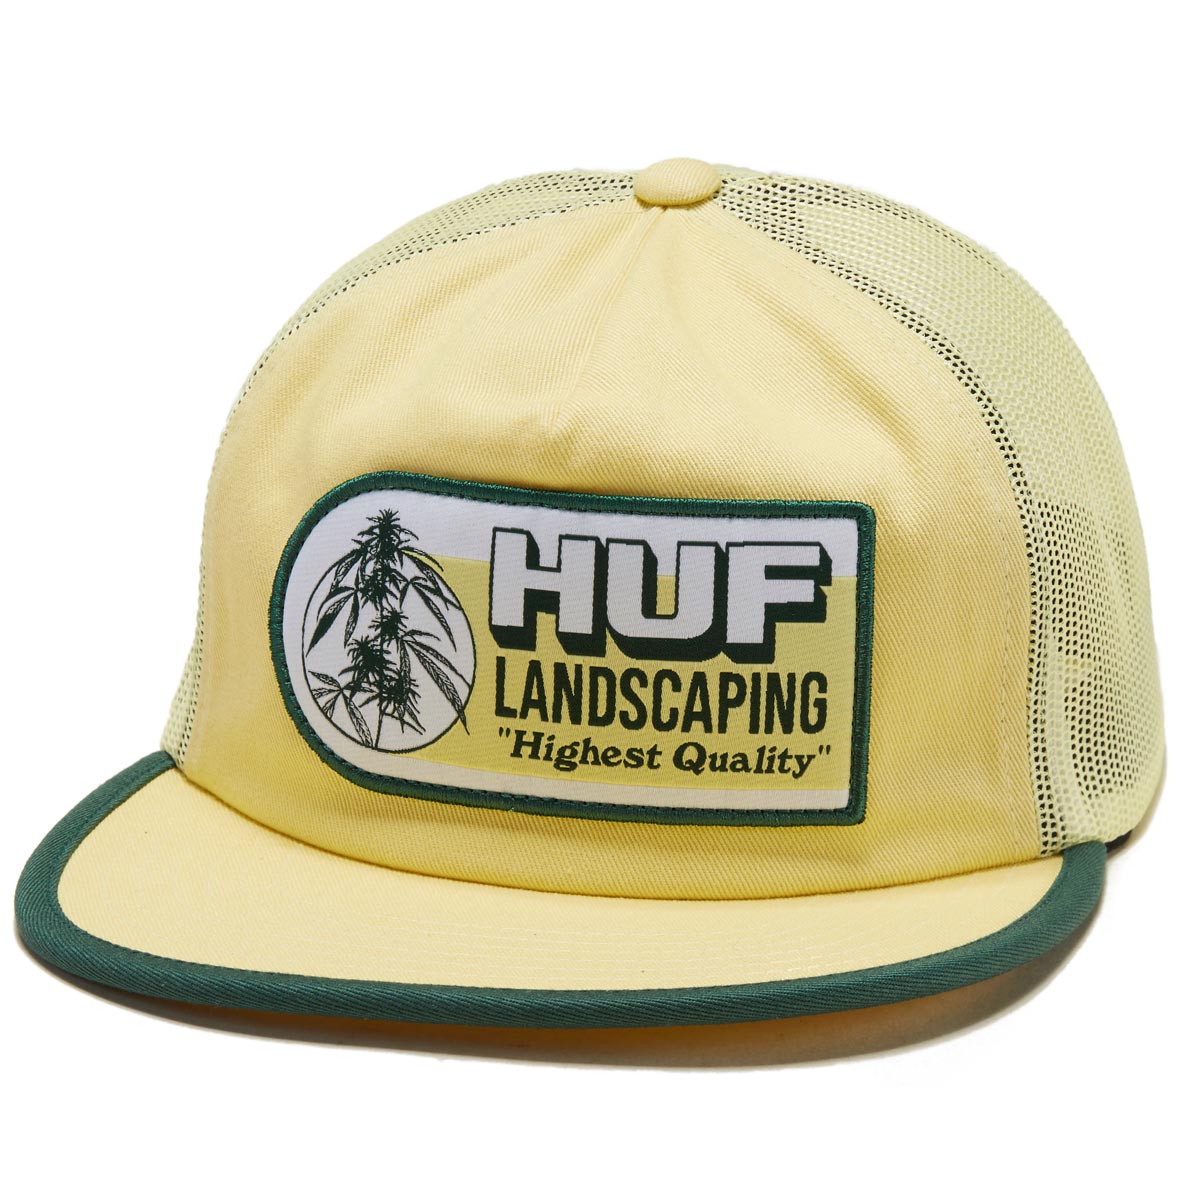 HUF Landscaping Trucker Hat - Yellow image 1